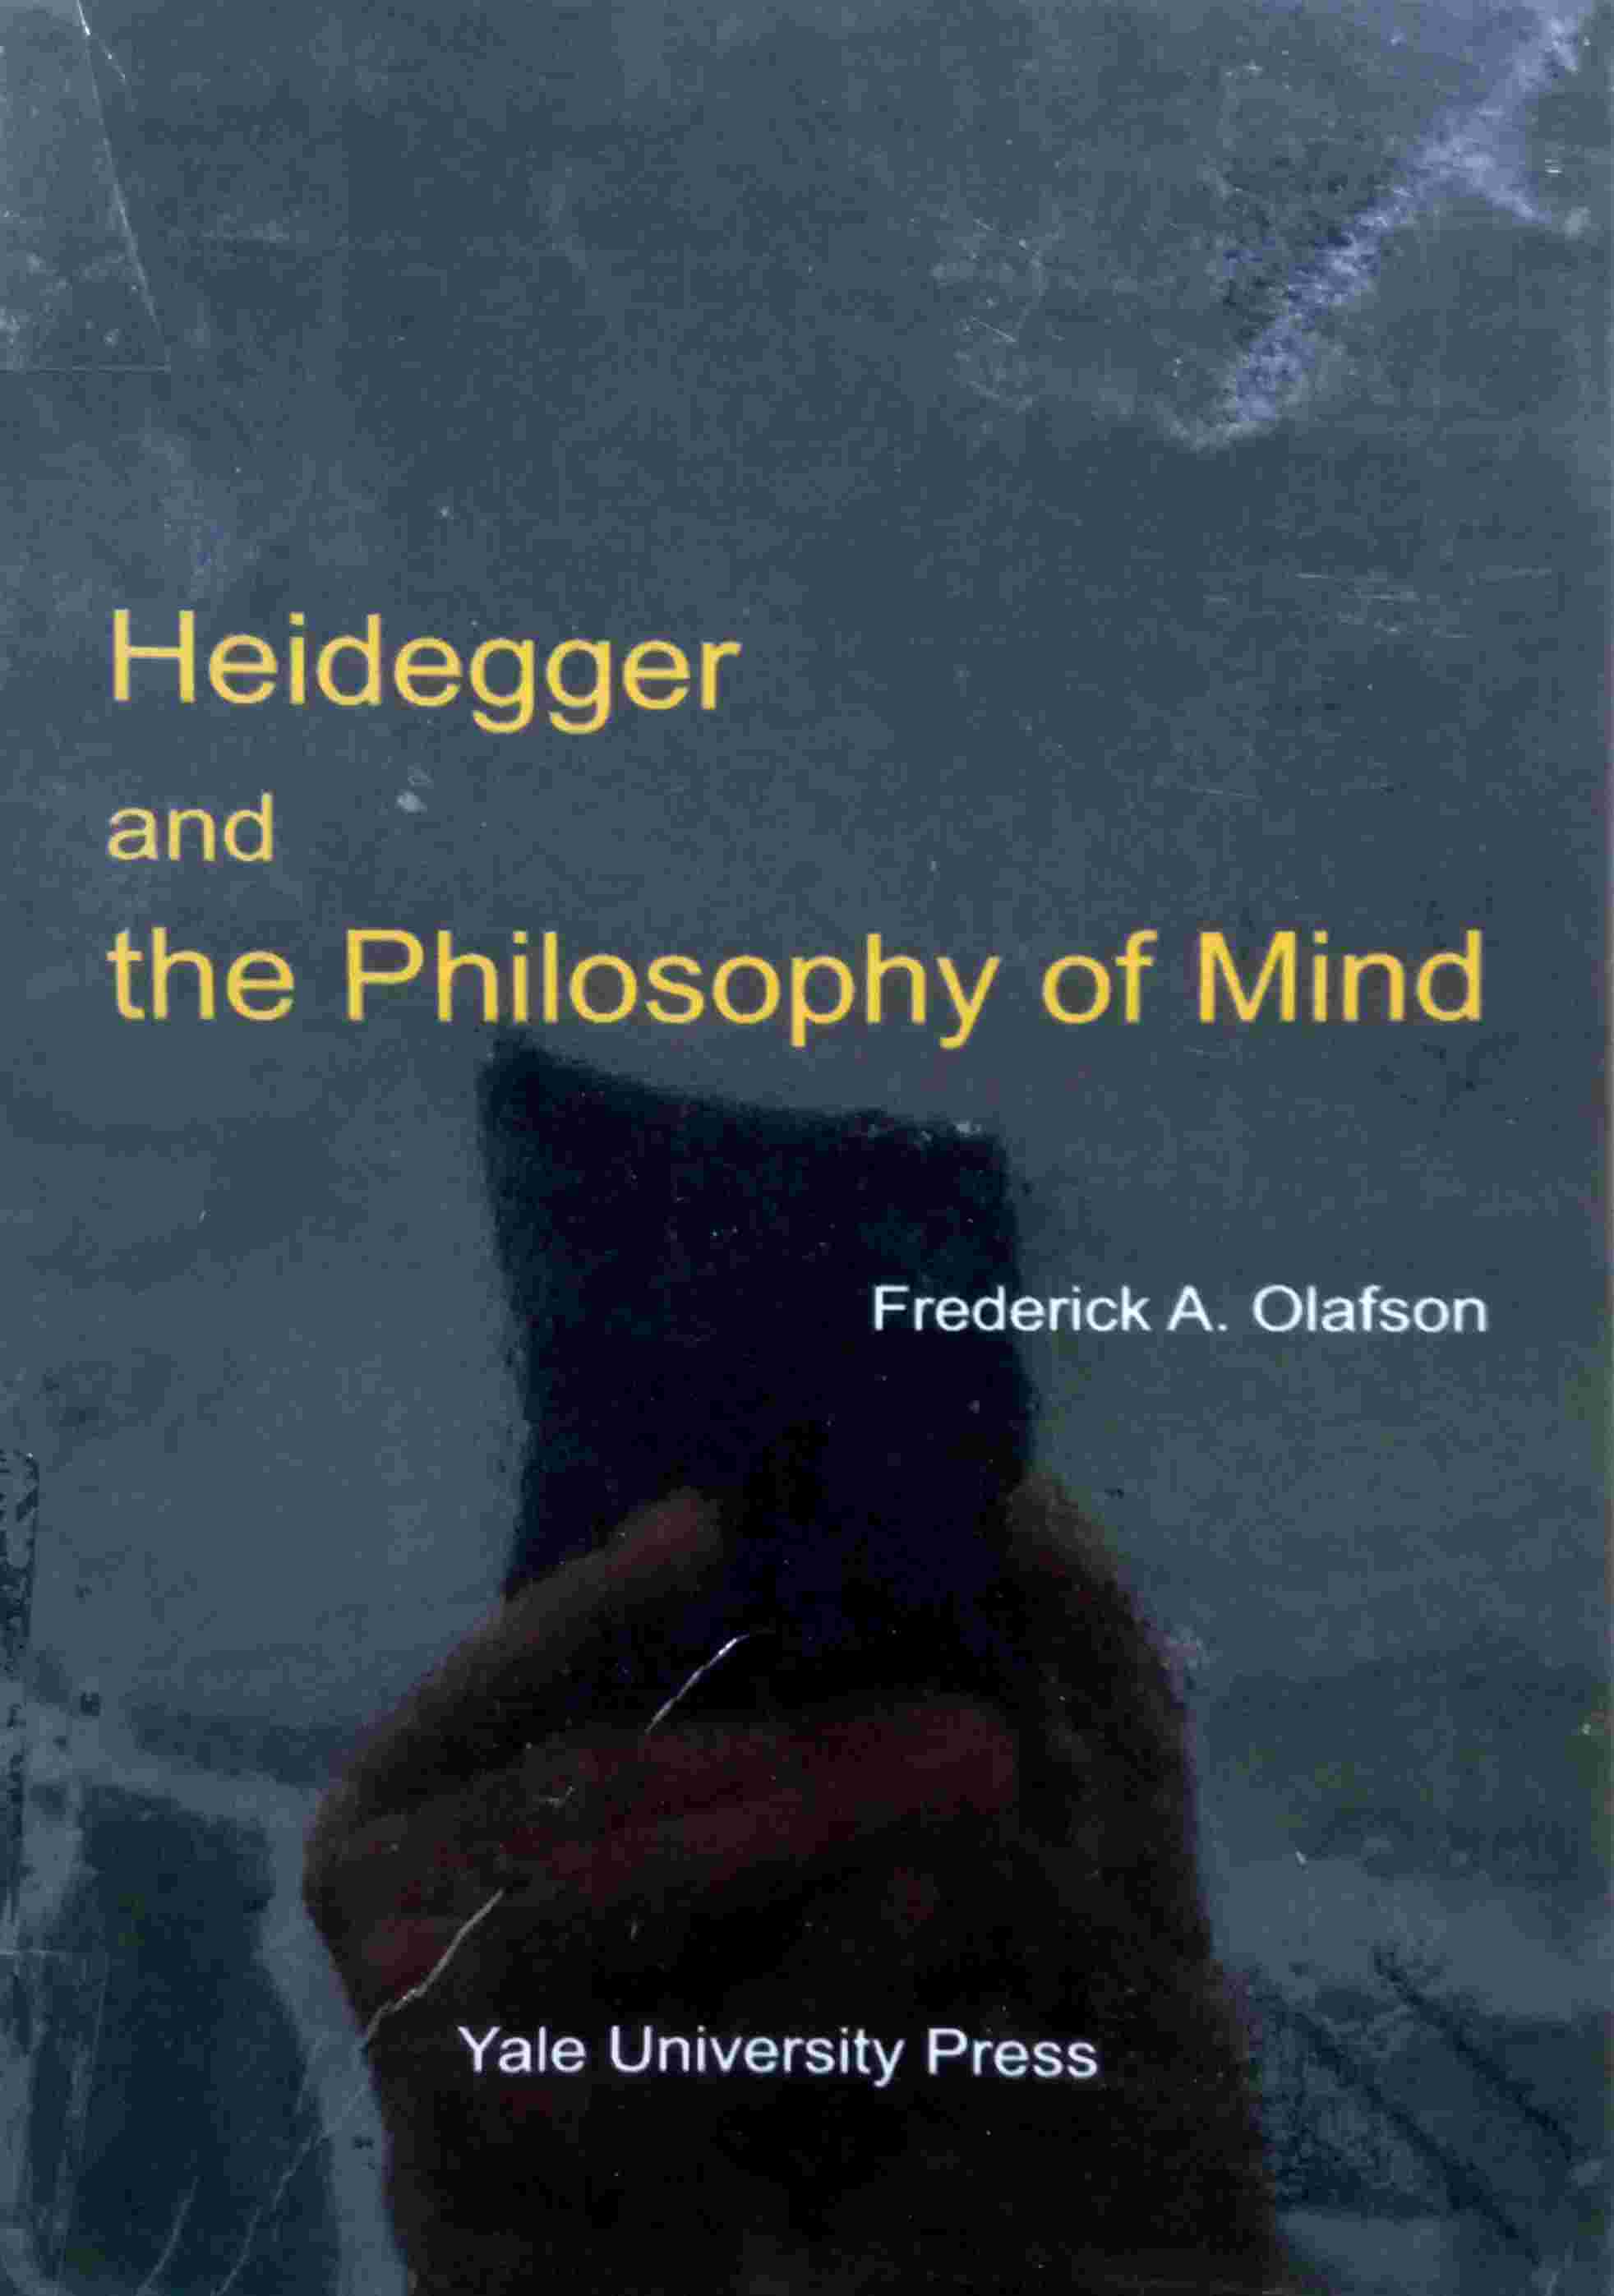 HEIDEGGER AND THE PHILOSOPHY OF MIND